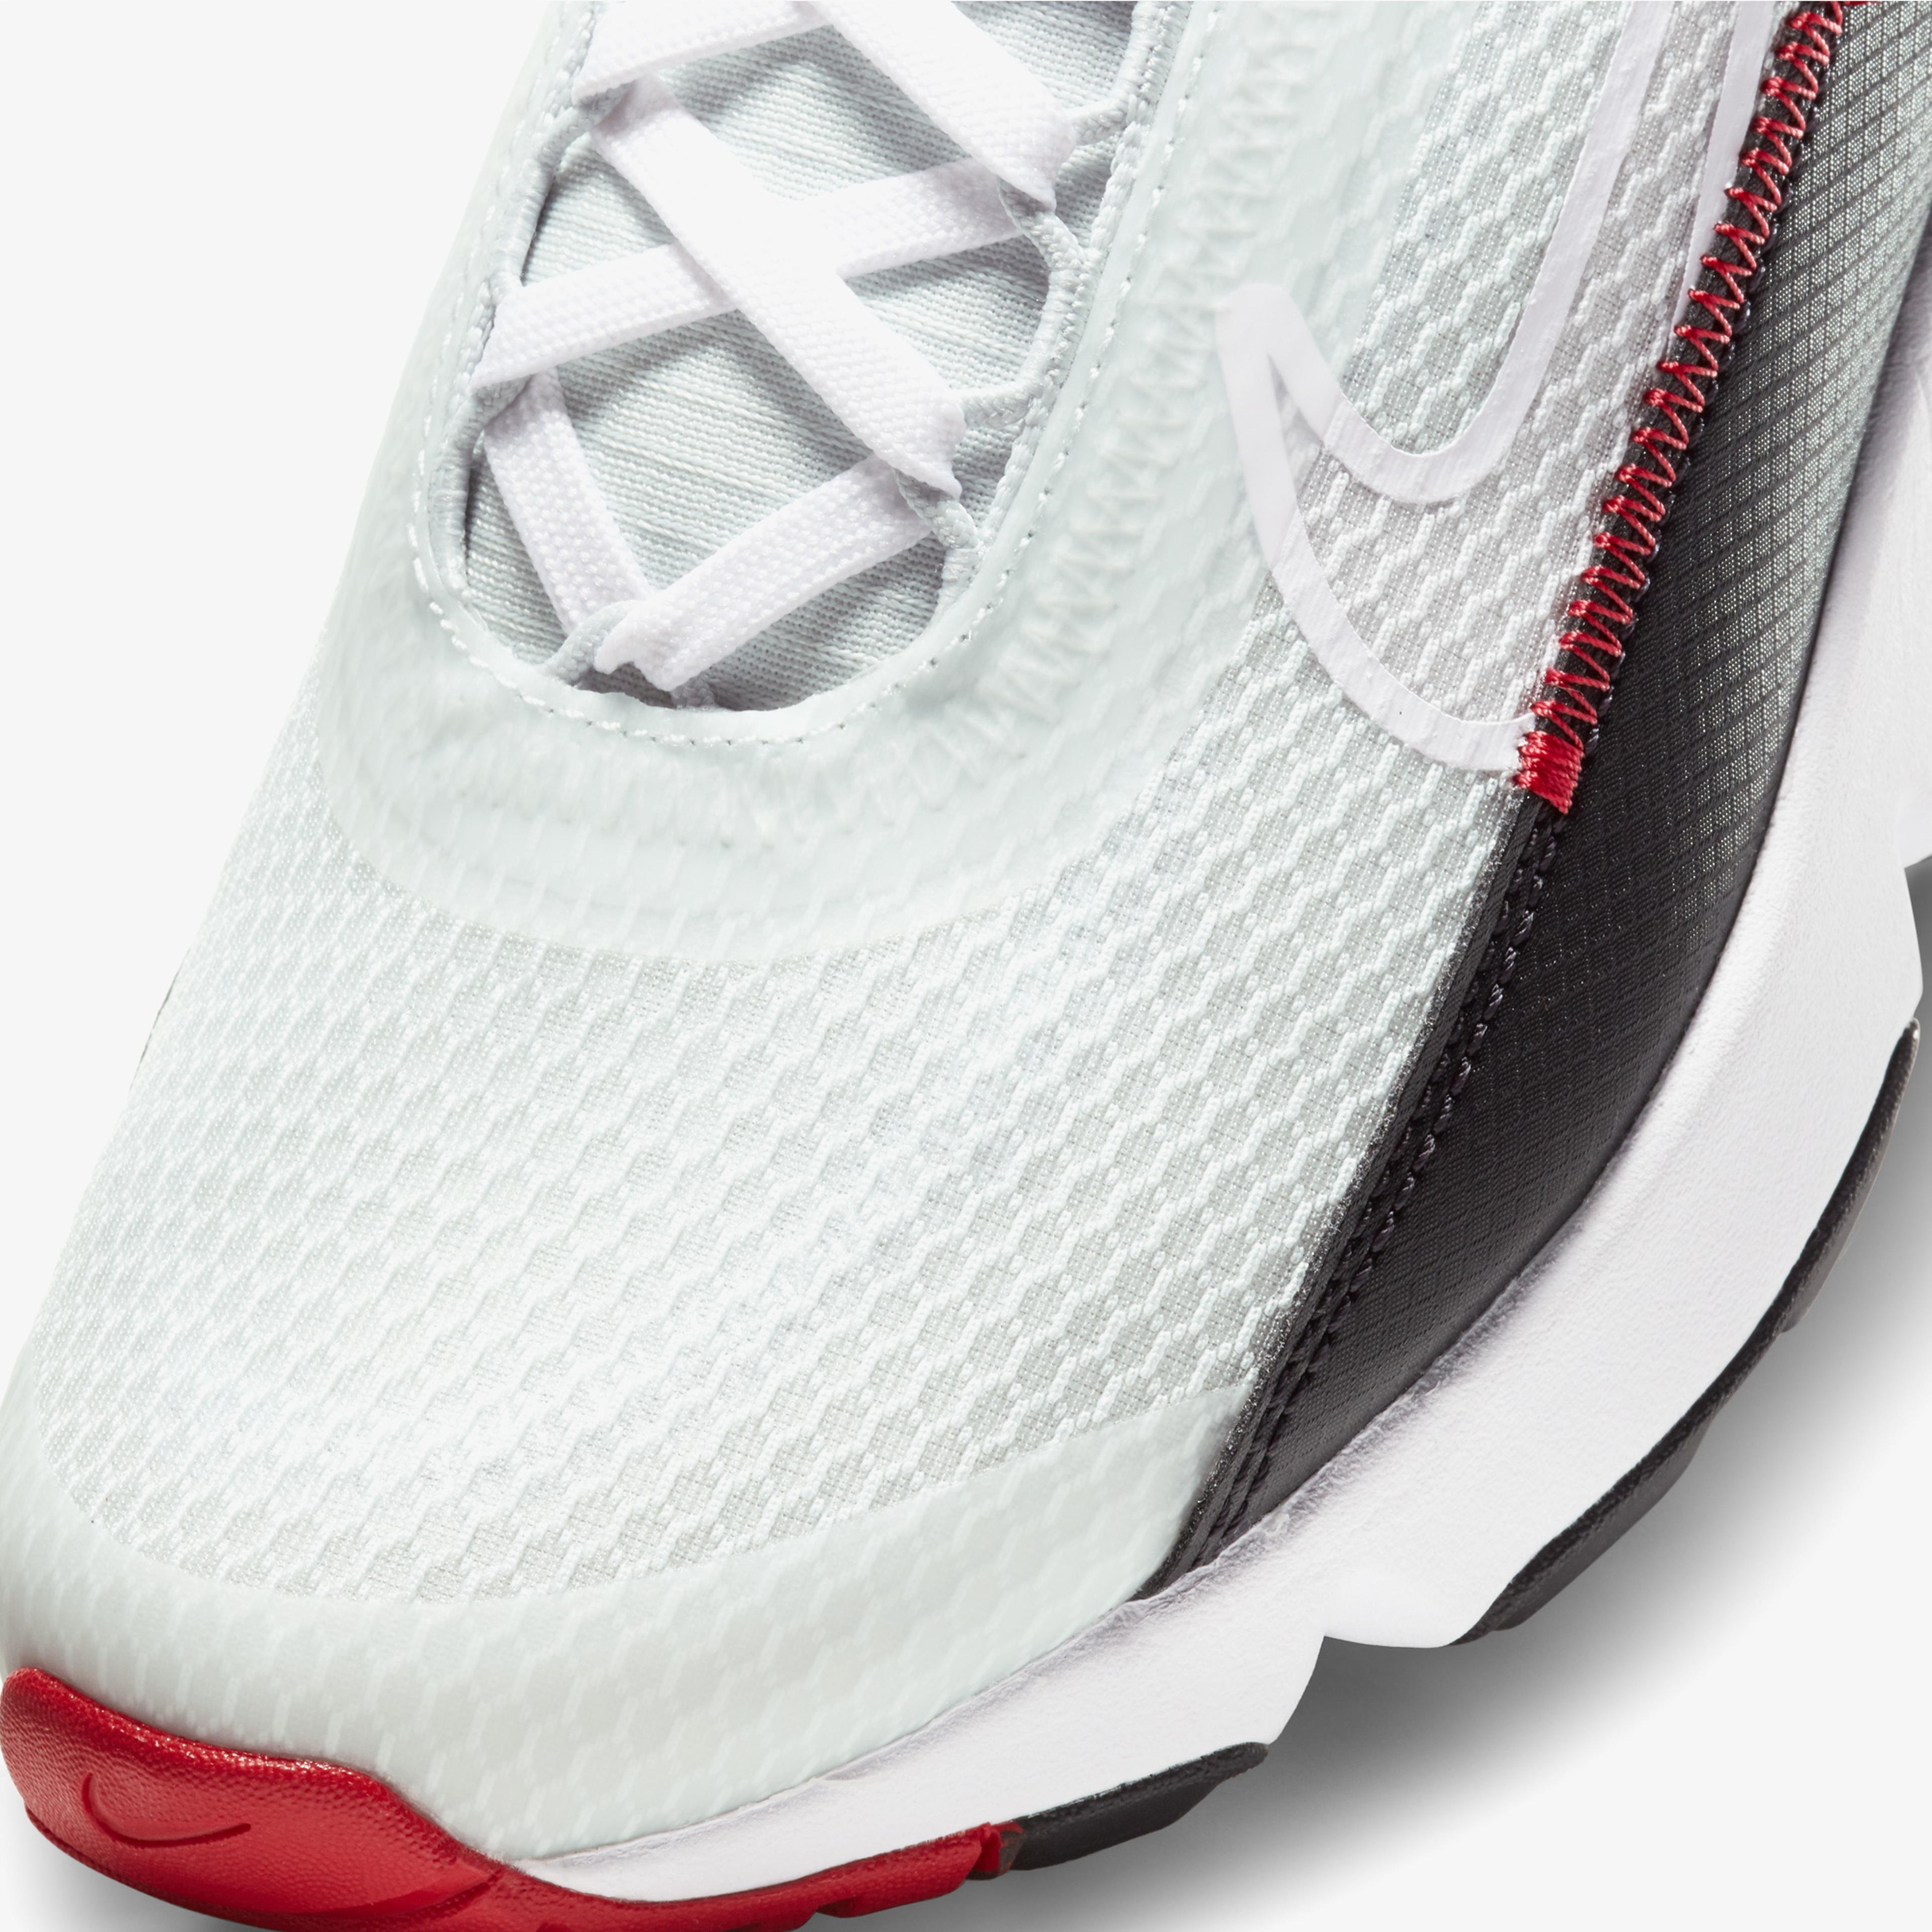 Nike Air Max 2090 Gs Kadın Gri Spor Ayakkabı